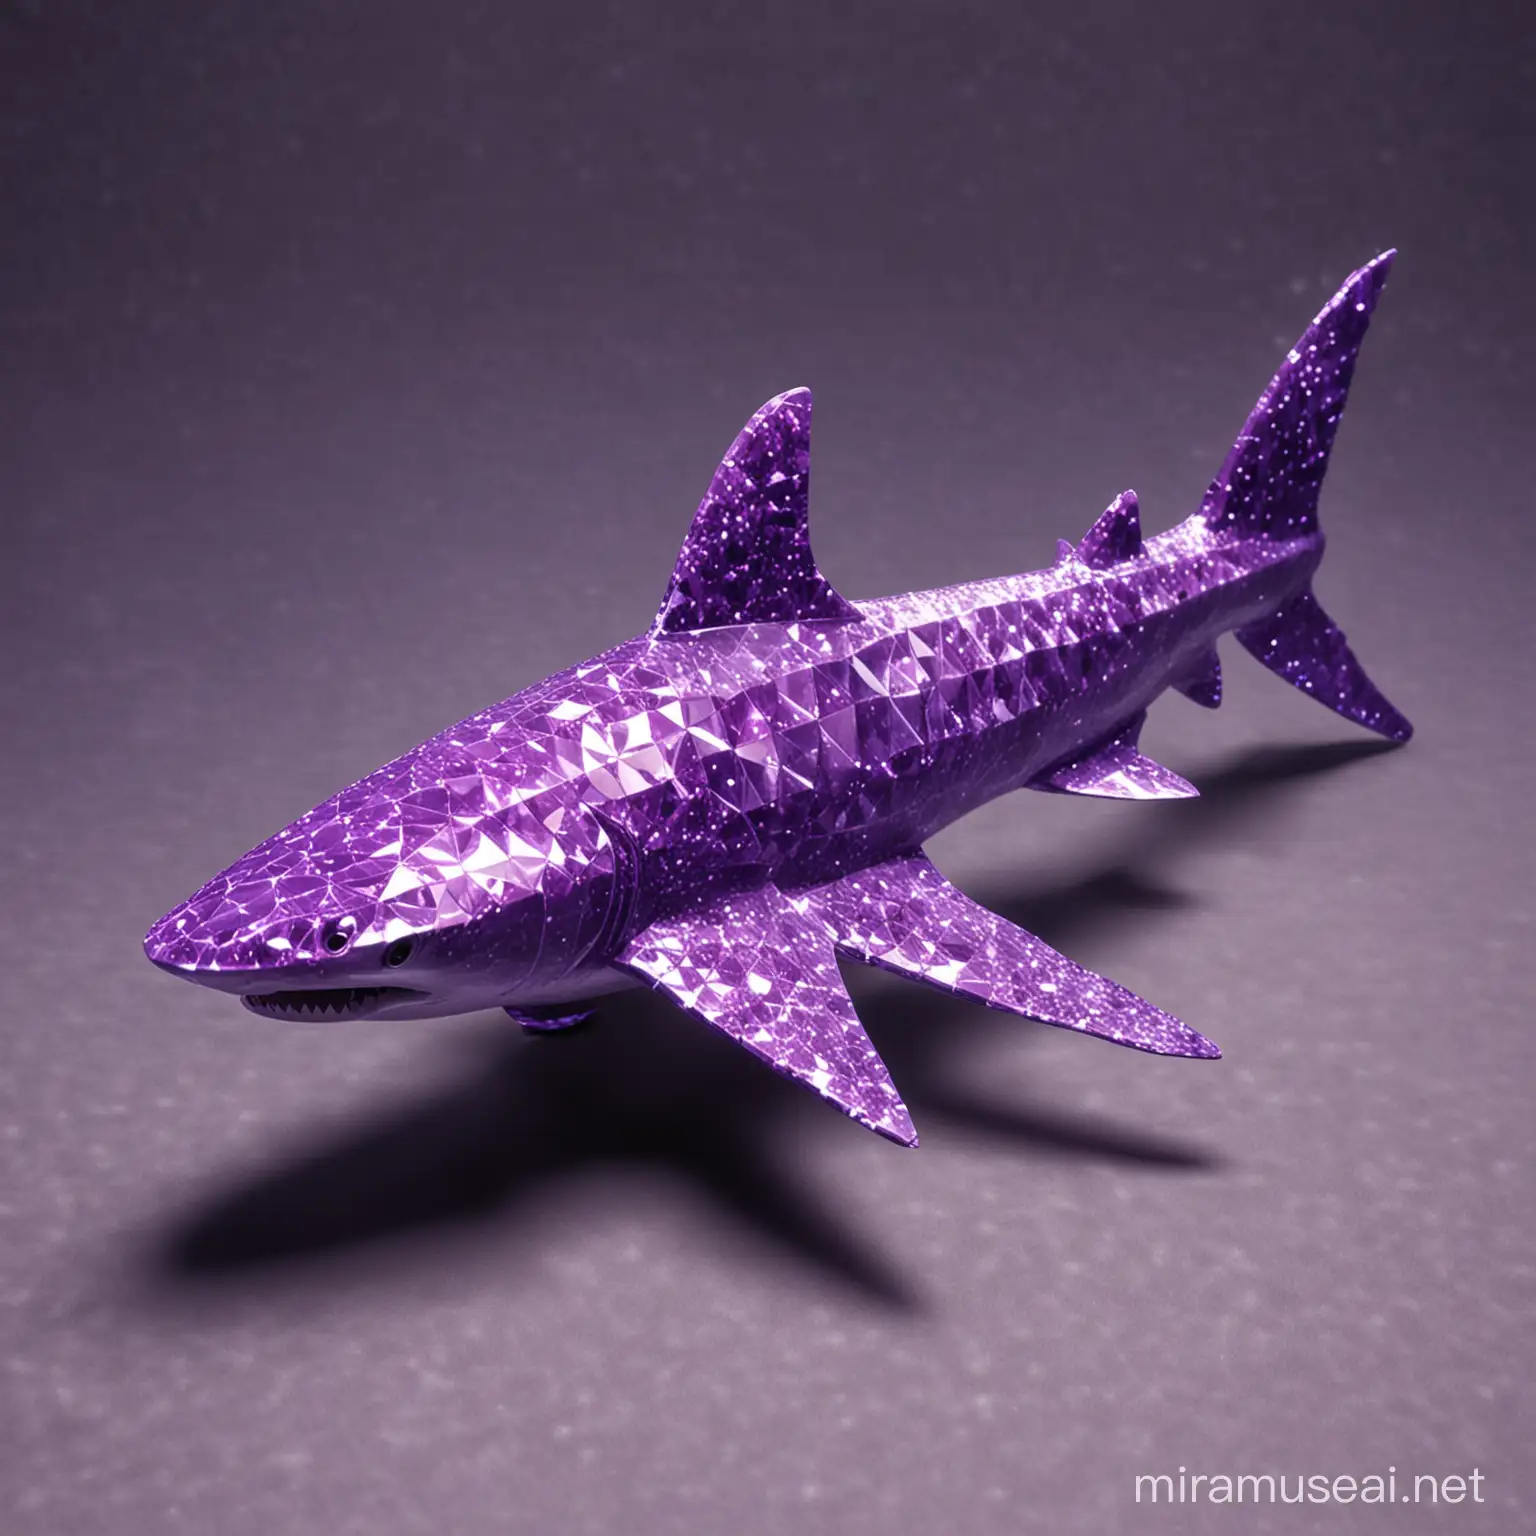 Majestic Purple Crystalline Shark in Underwater Kingdom